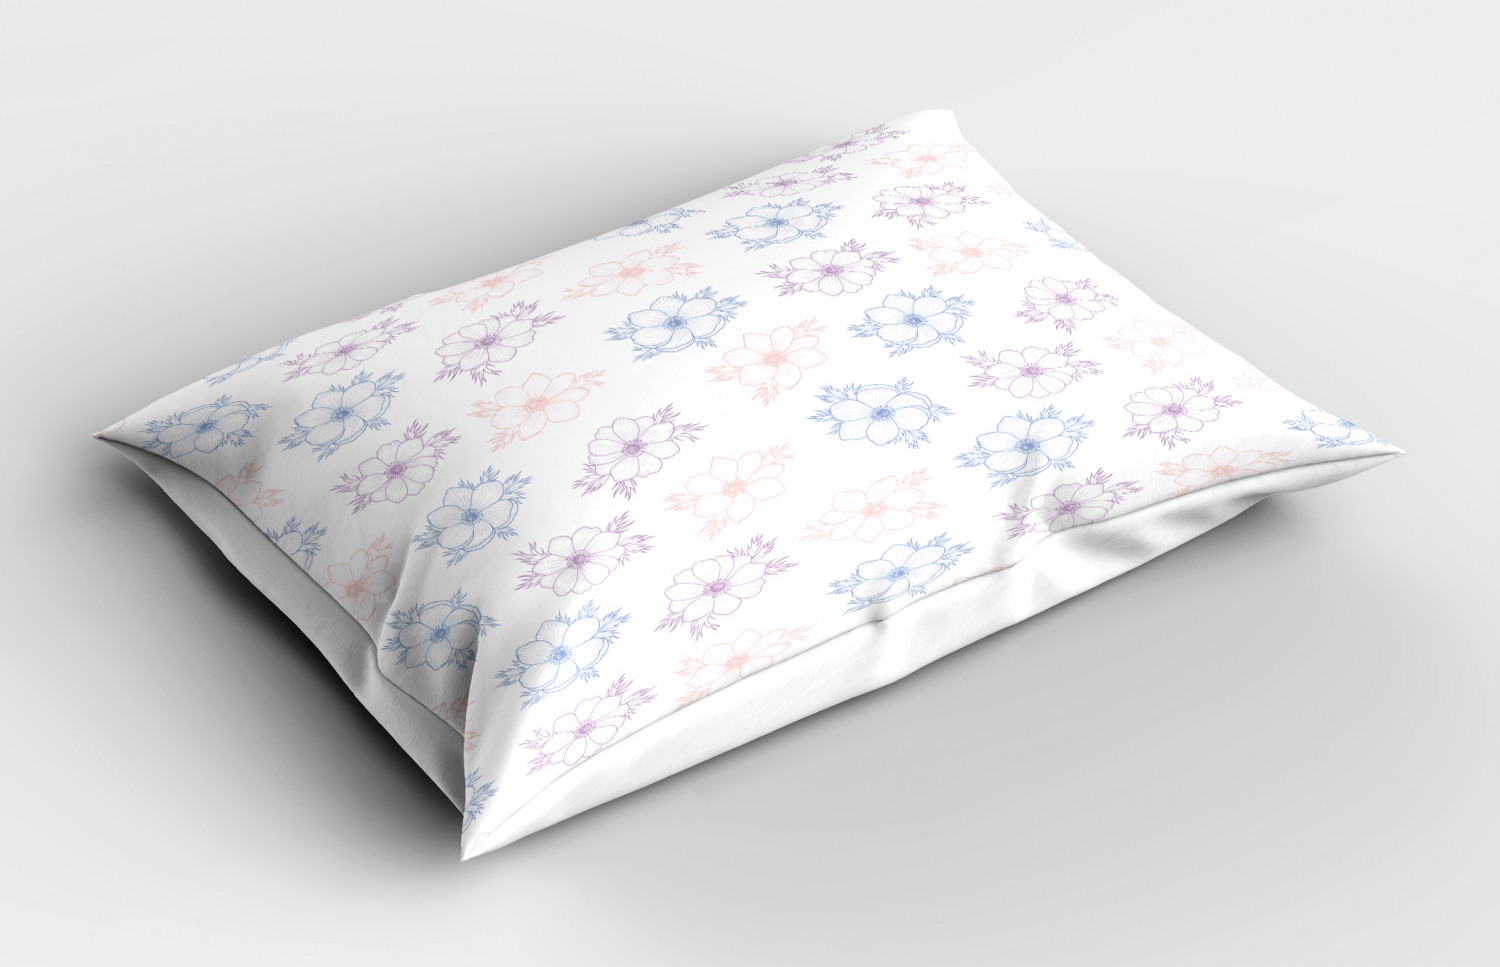 Details about   Anemone Flower Pillow Sham Decorative Pillowcase 3 Sizes Bedroom Decor Ambesonne 